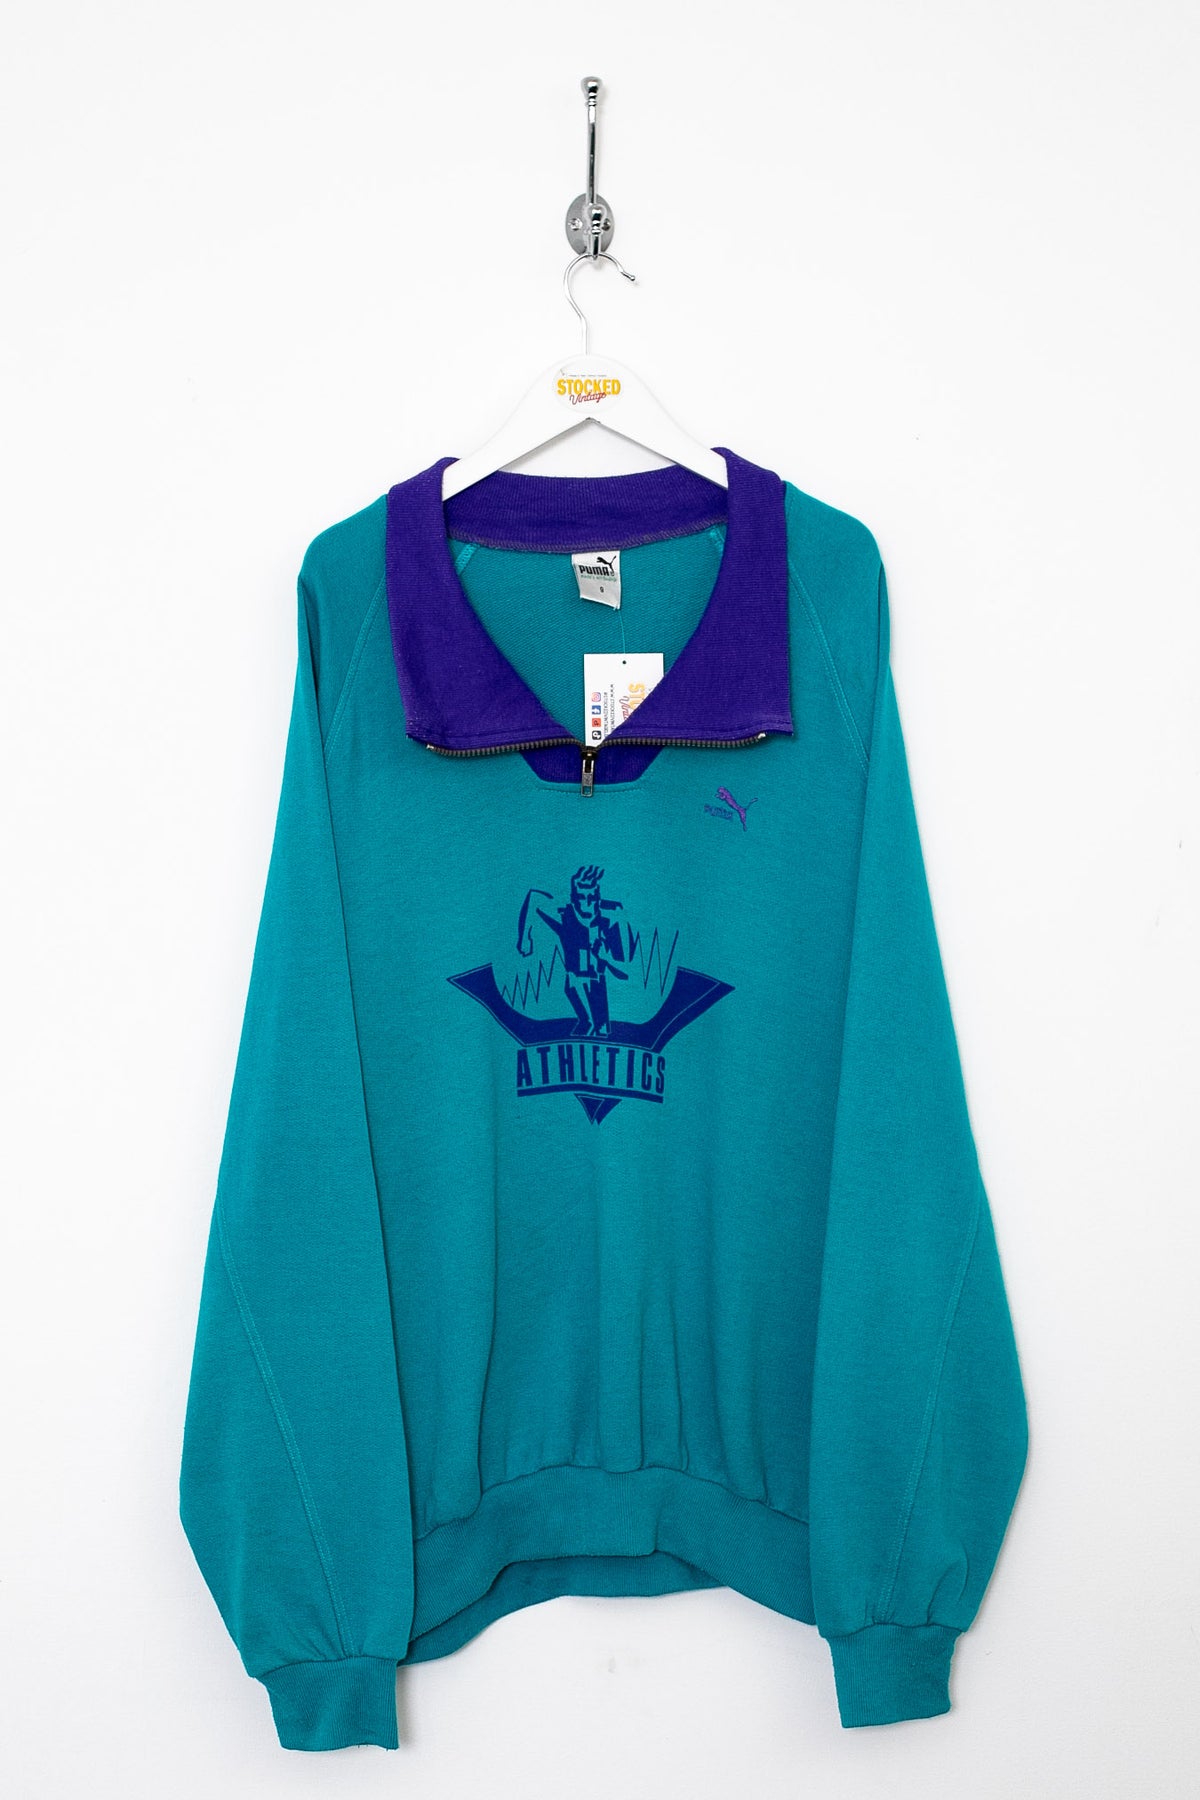 90s Puma 1/4 Zip Sweatshirt (XXL)